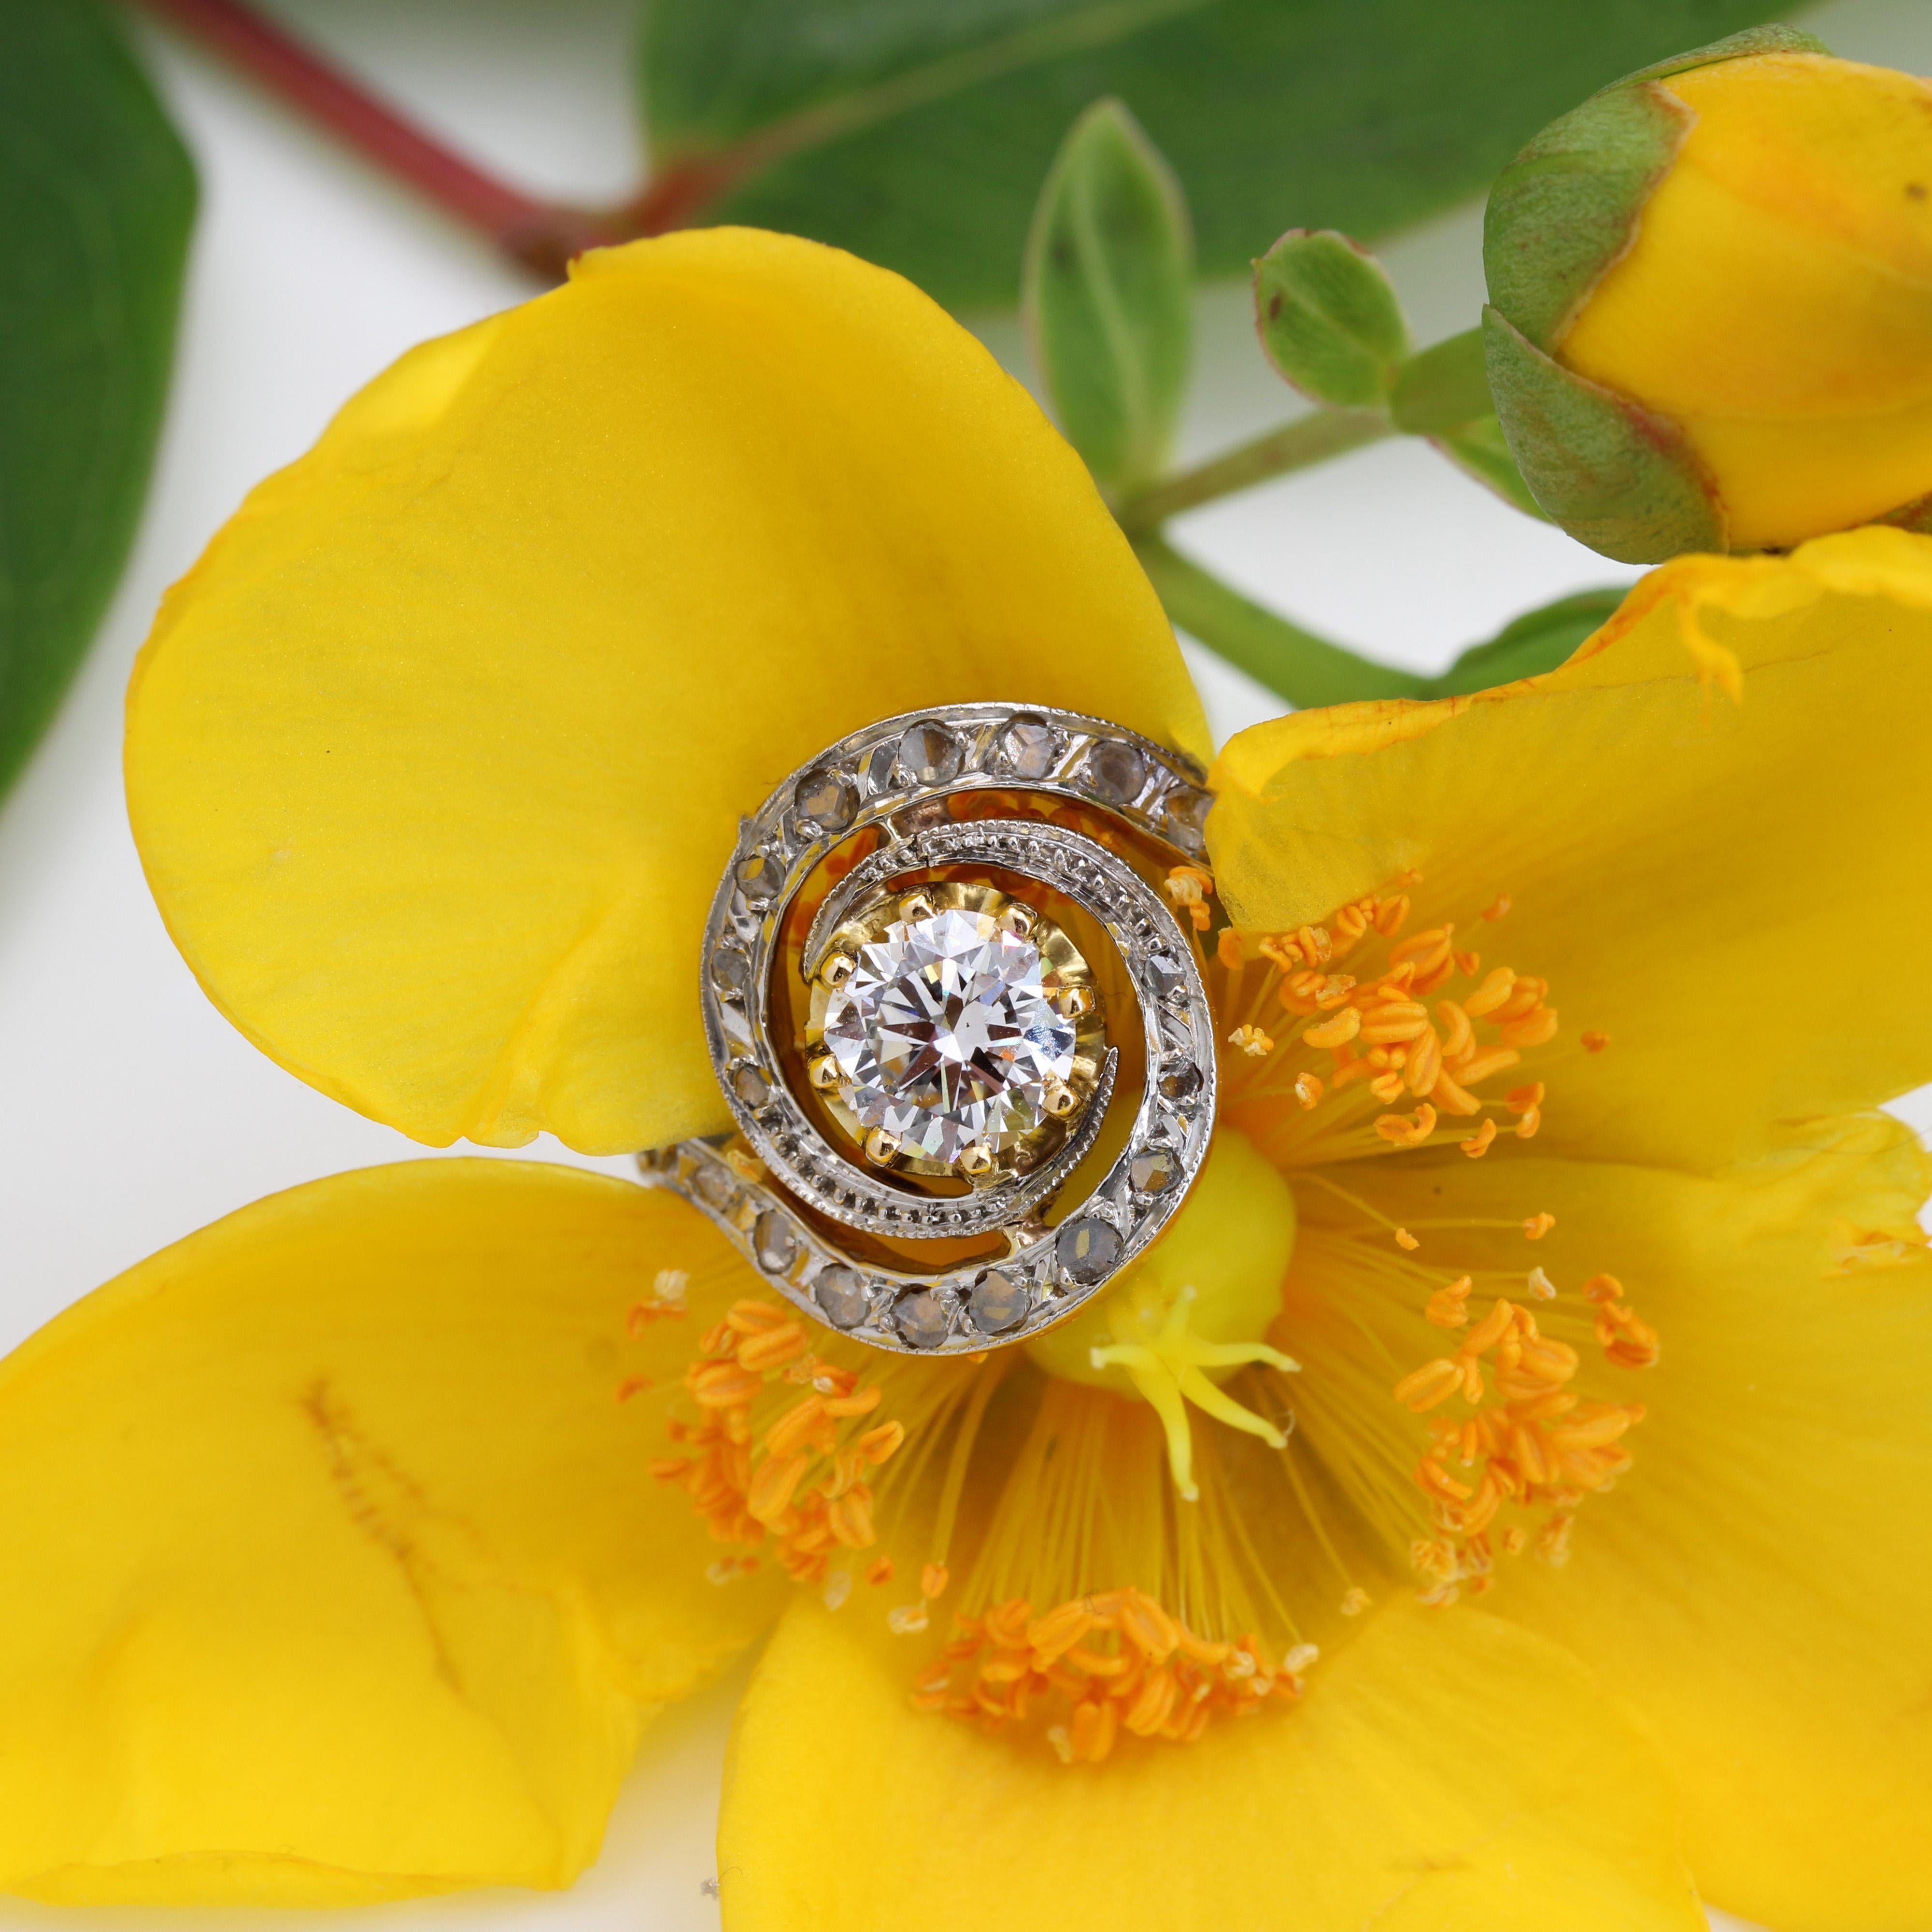 vintage swirl engagement ring